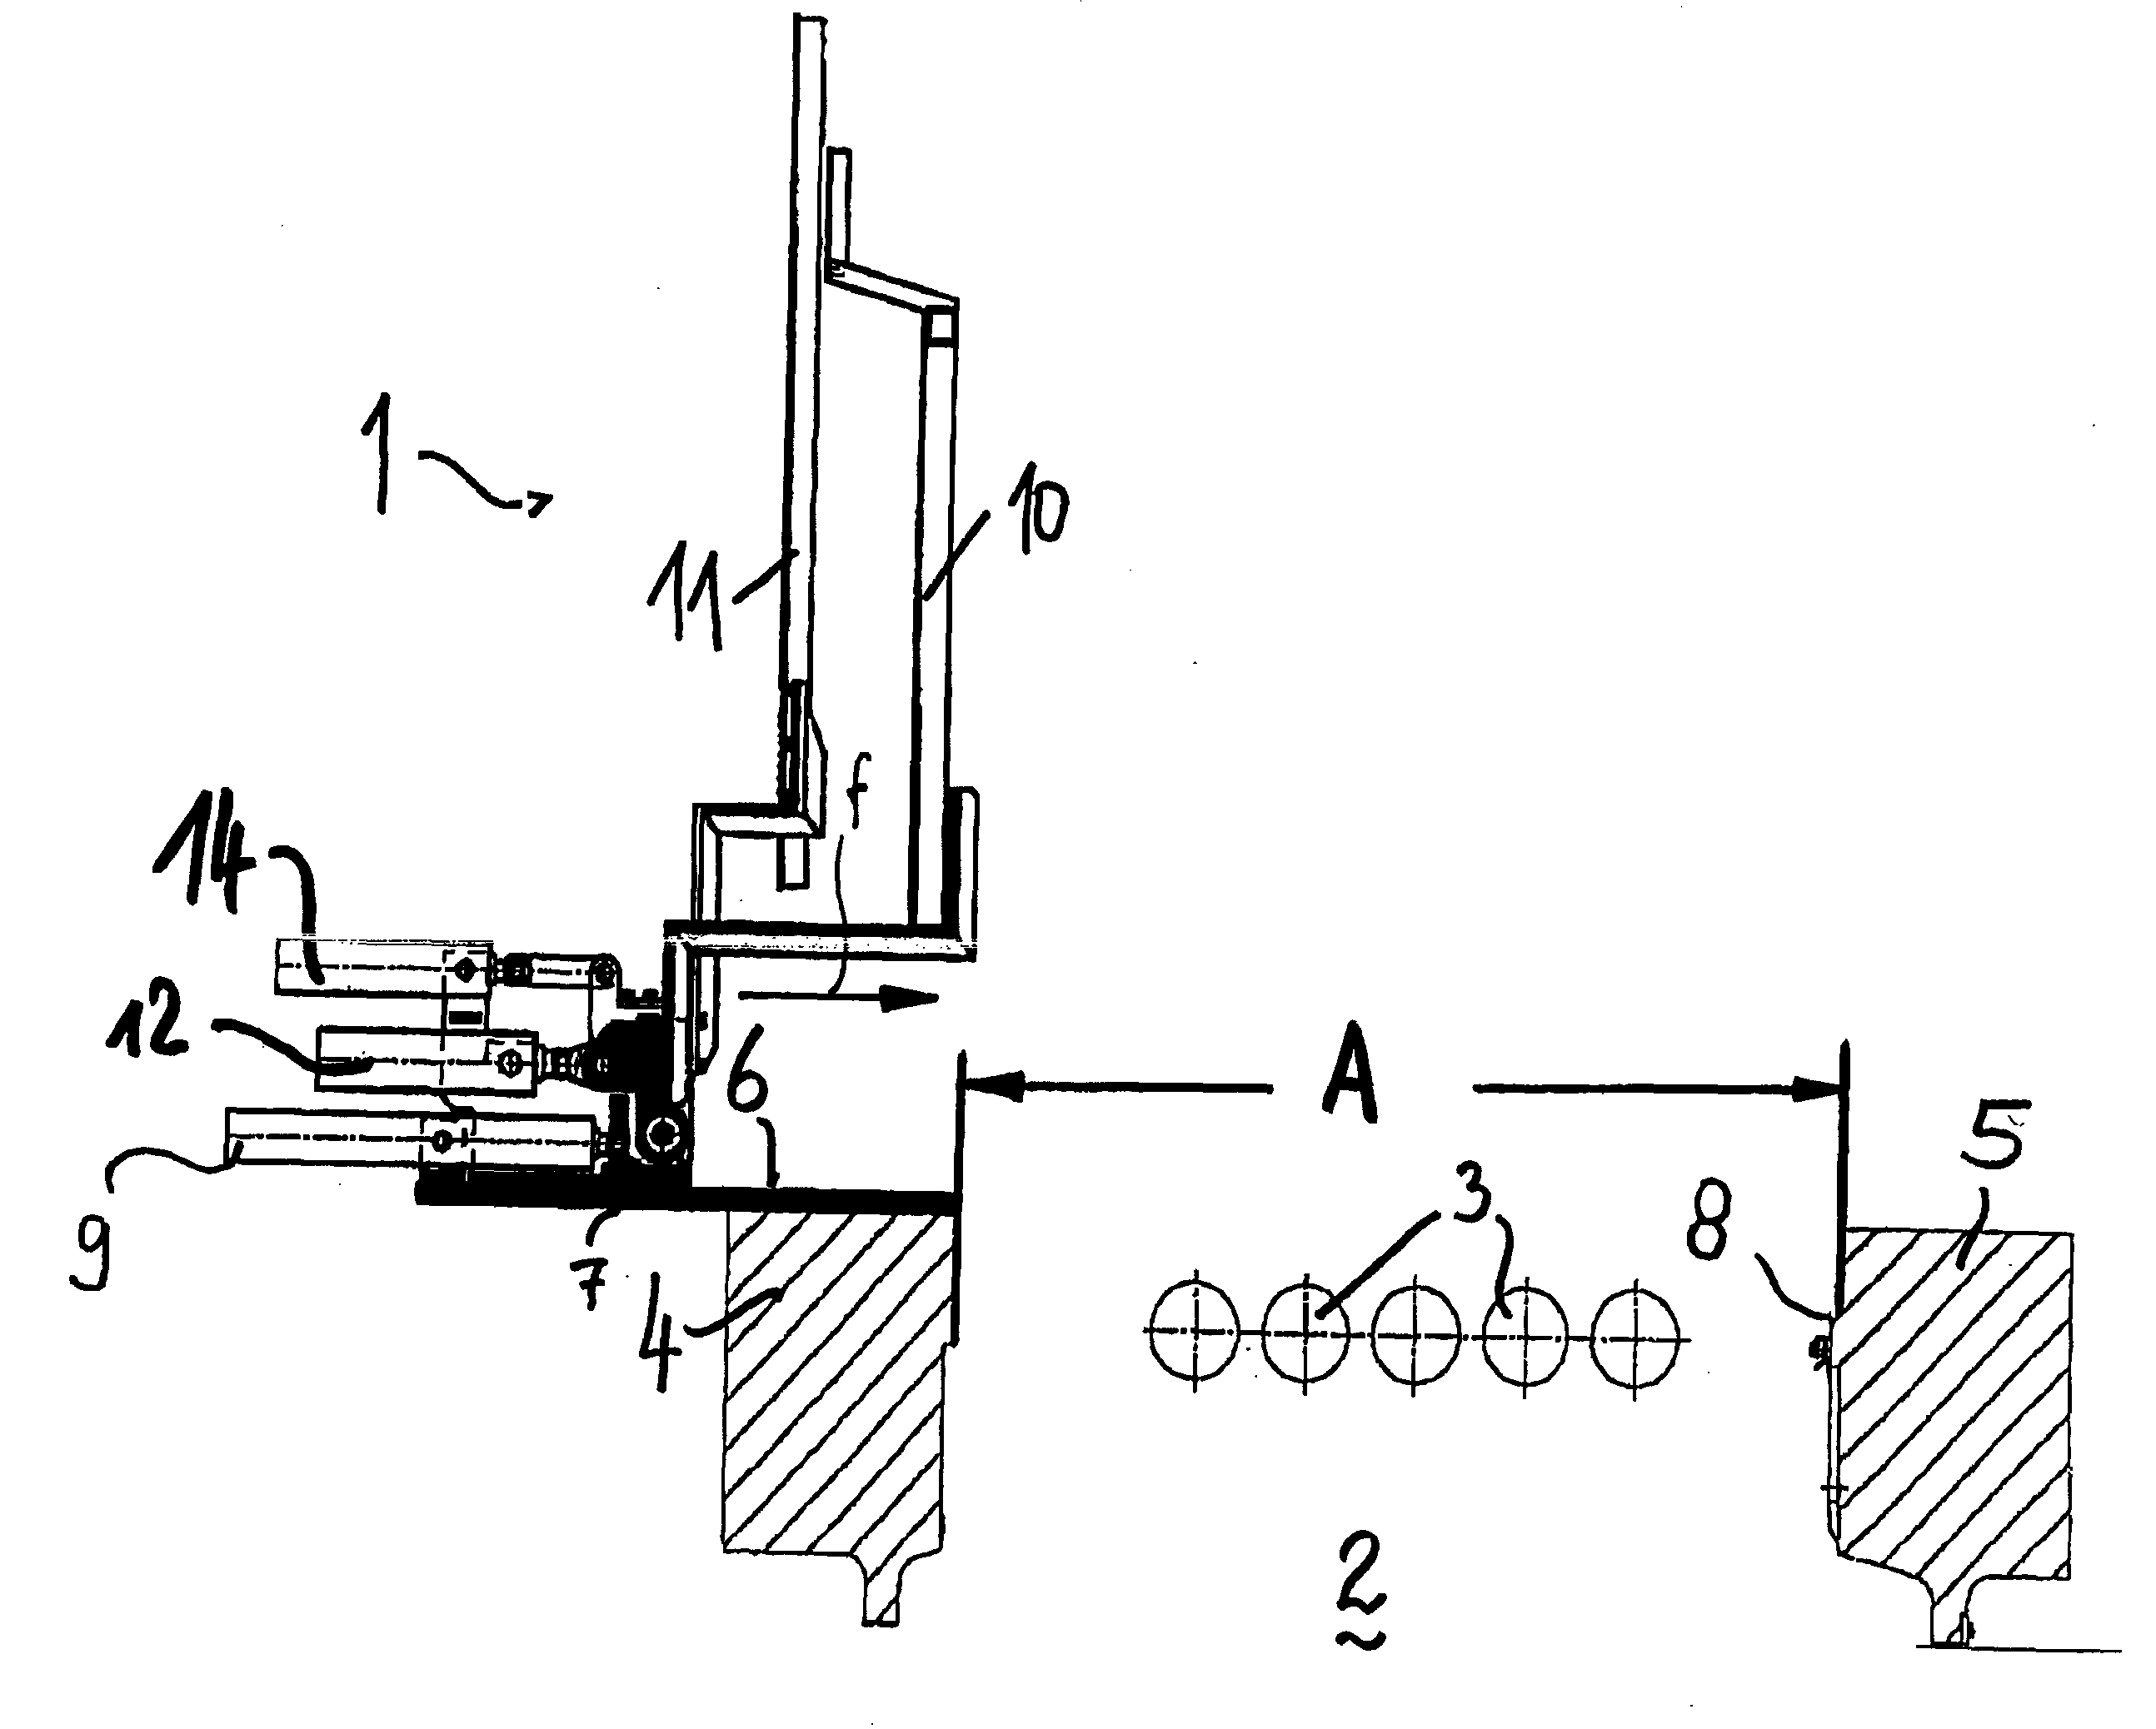 Workpiece deforming press including a safety device